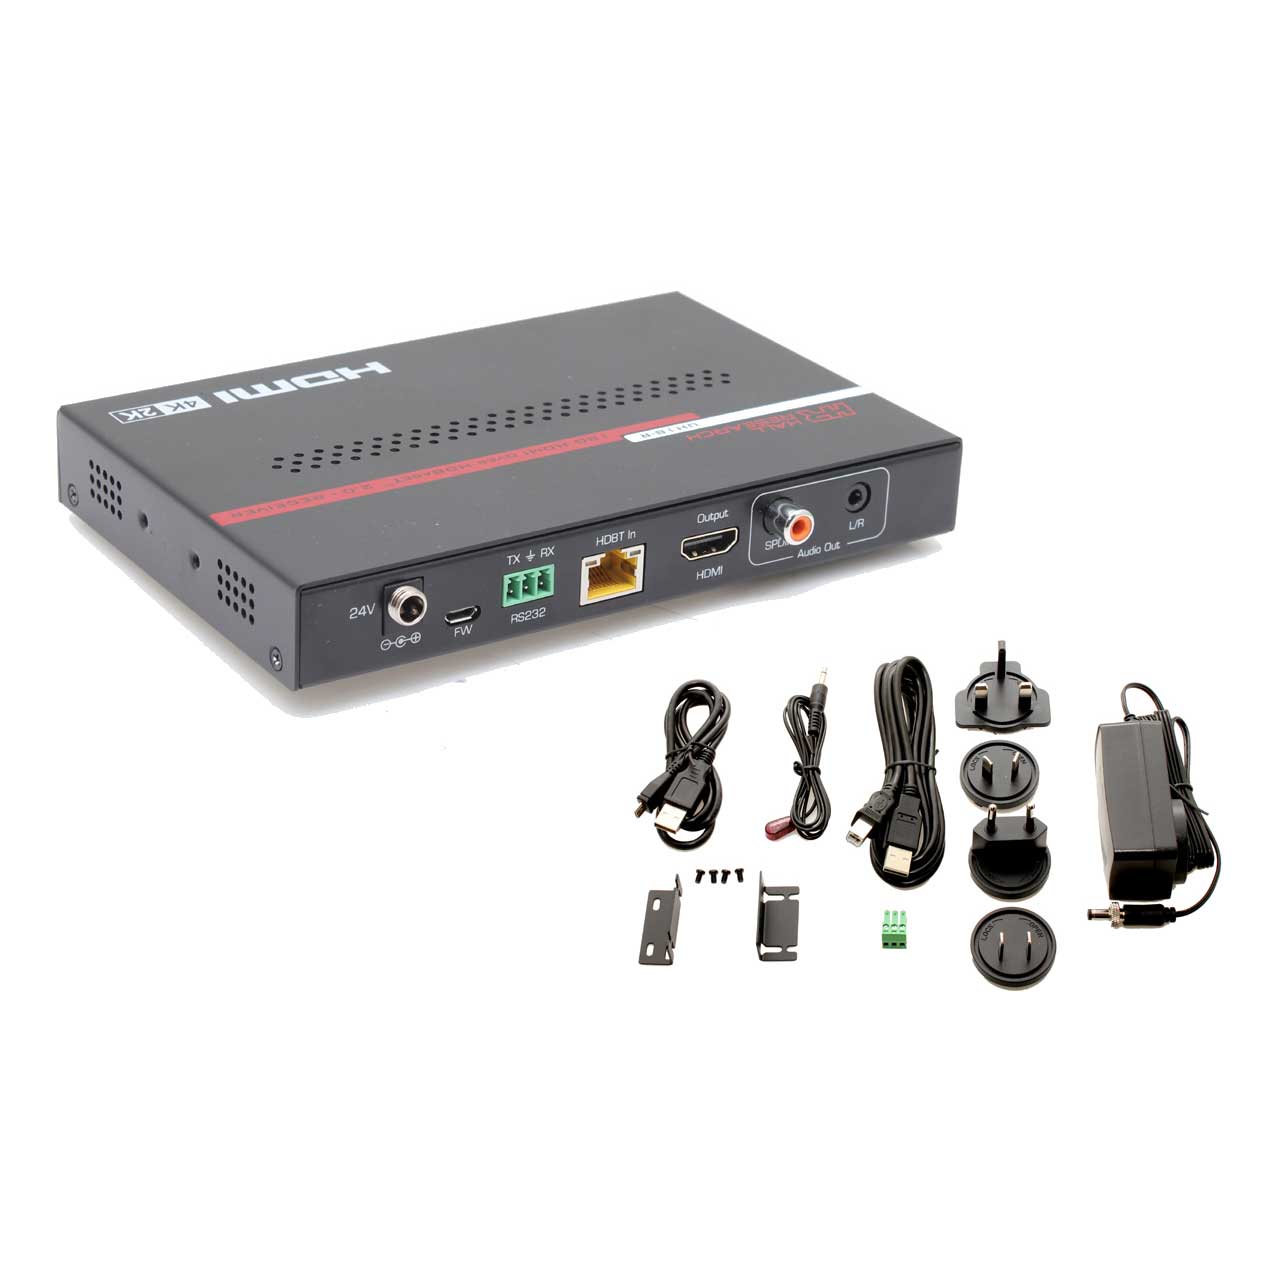 sweater Slange Hr Hall Technologies UH18-S HDMI / USB / LAN over UTP Extender with HDBaseT  and PoC - Transmitter